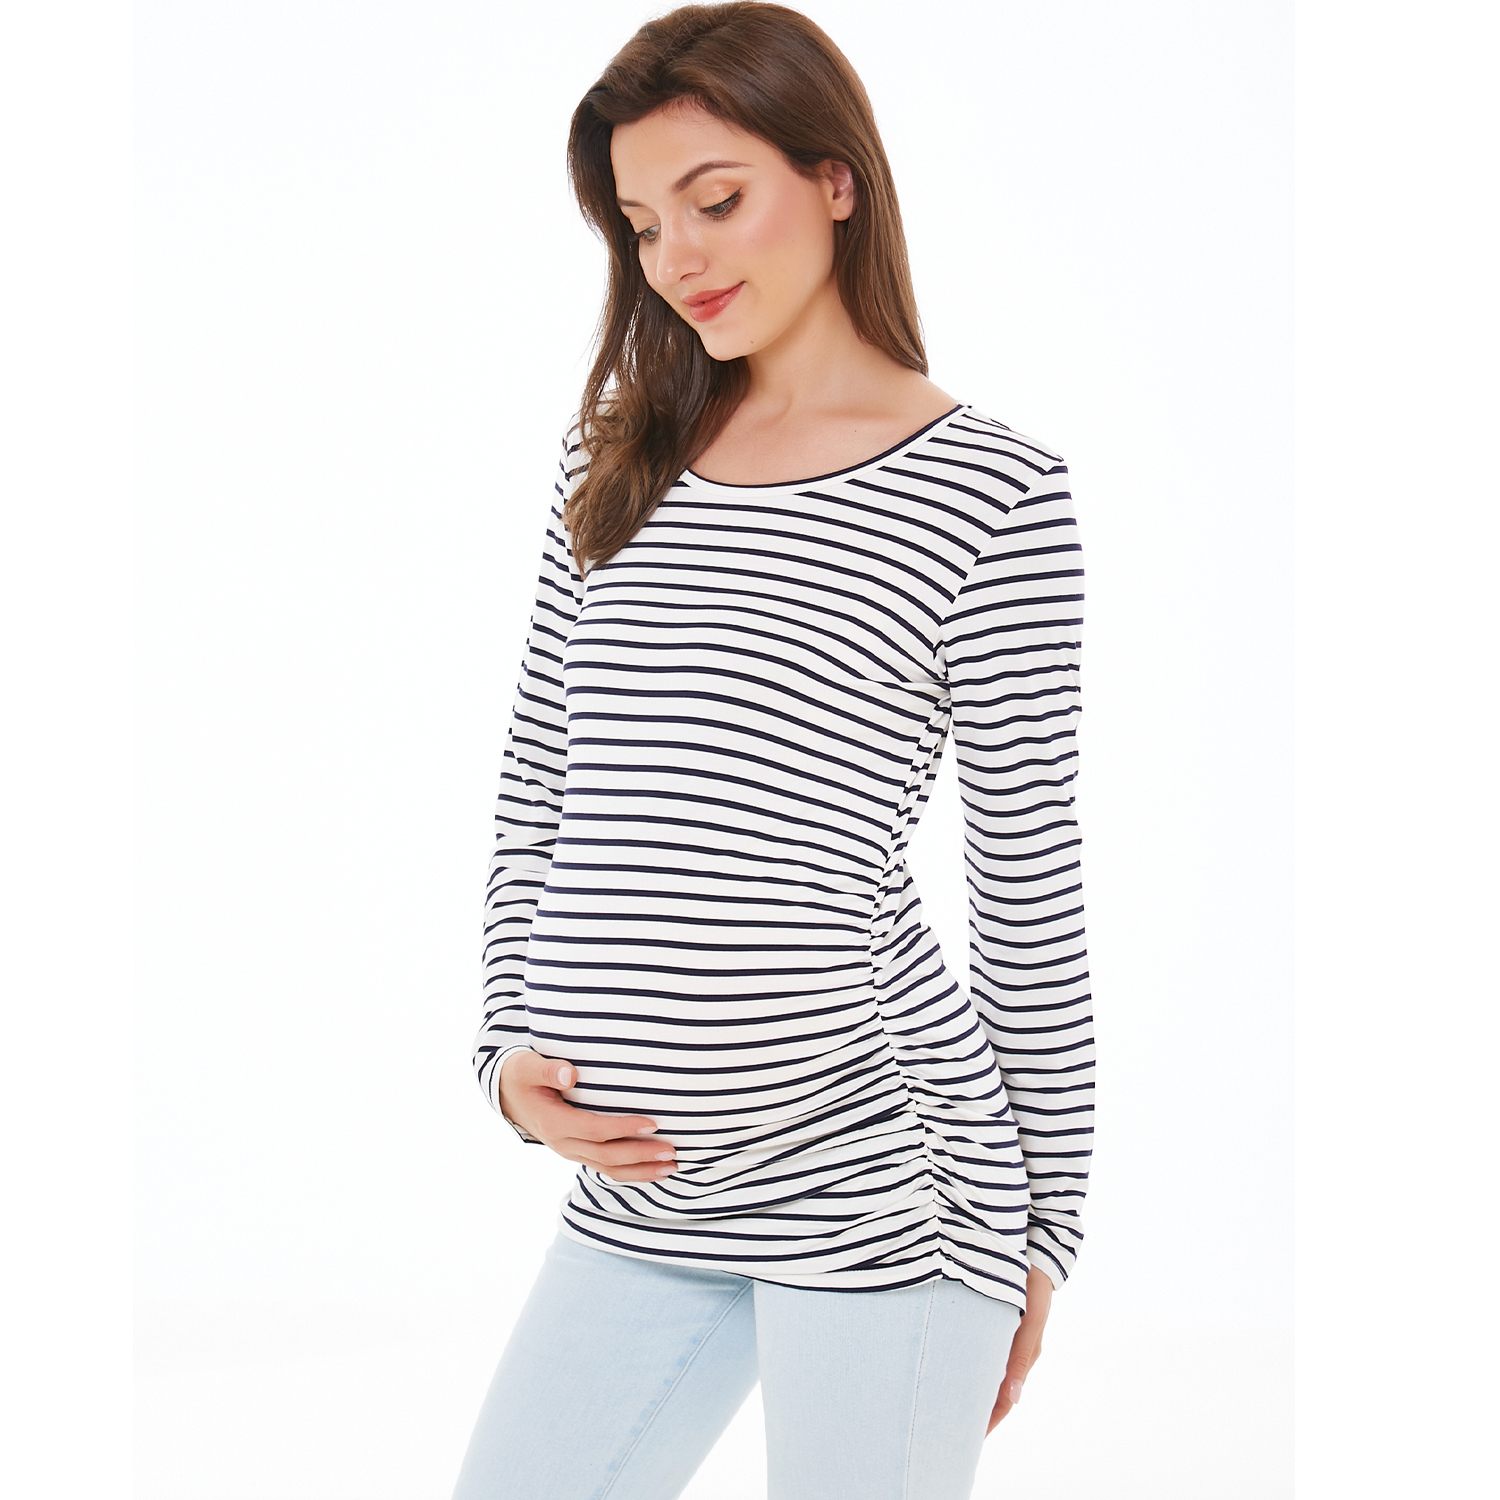 mærke navn tab klient Smallshow Women's Maternity Shirts Long Sleeve Pregnancy Clothes Tops